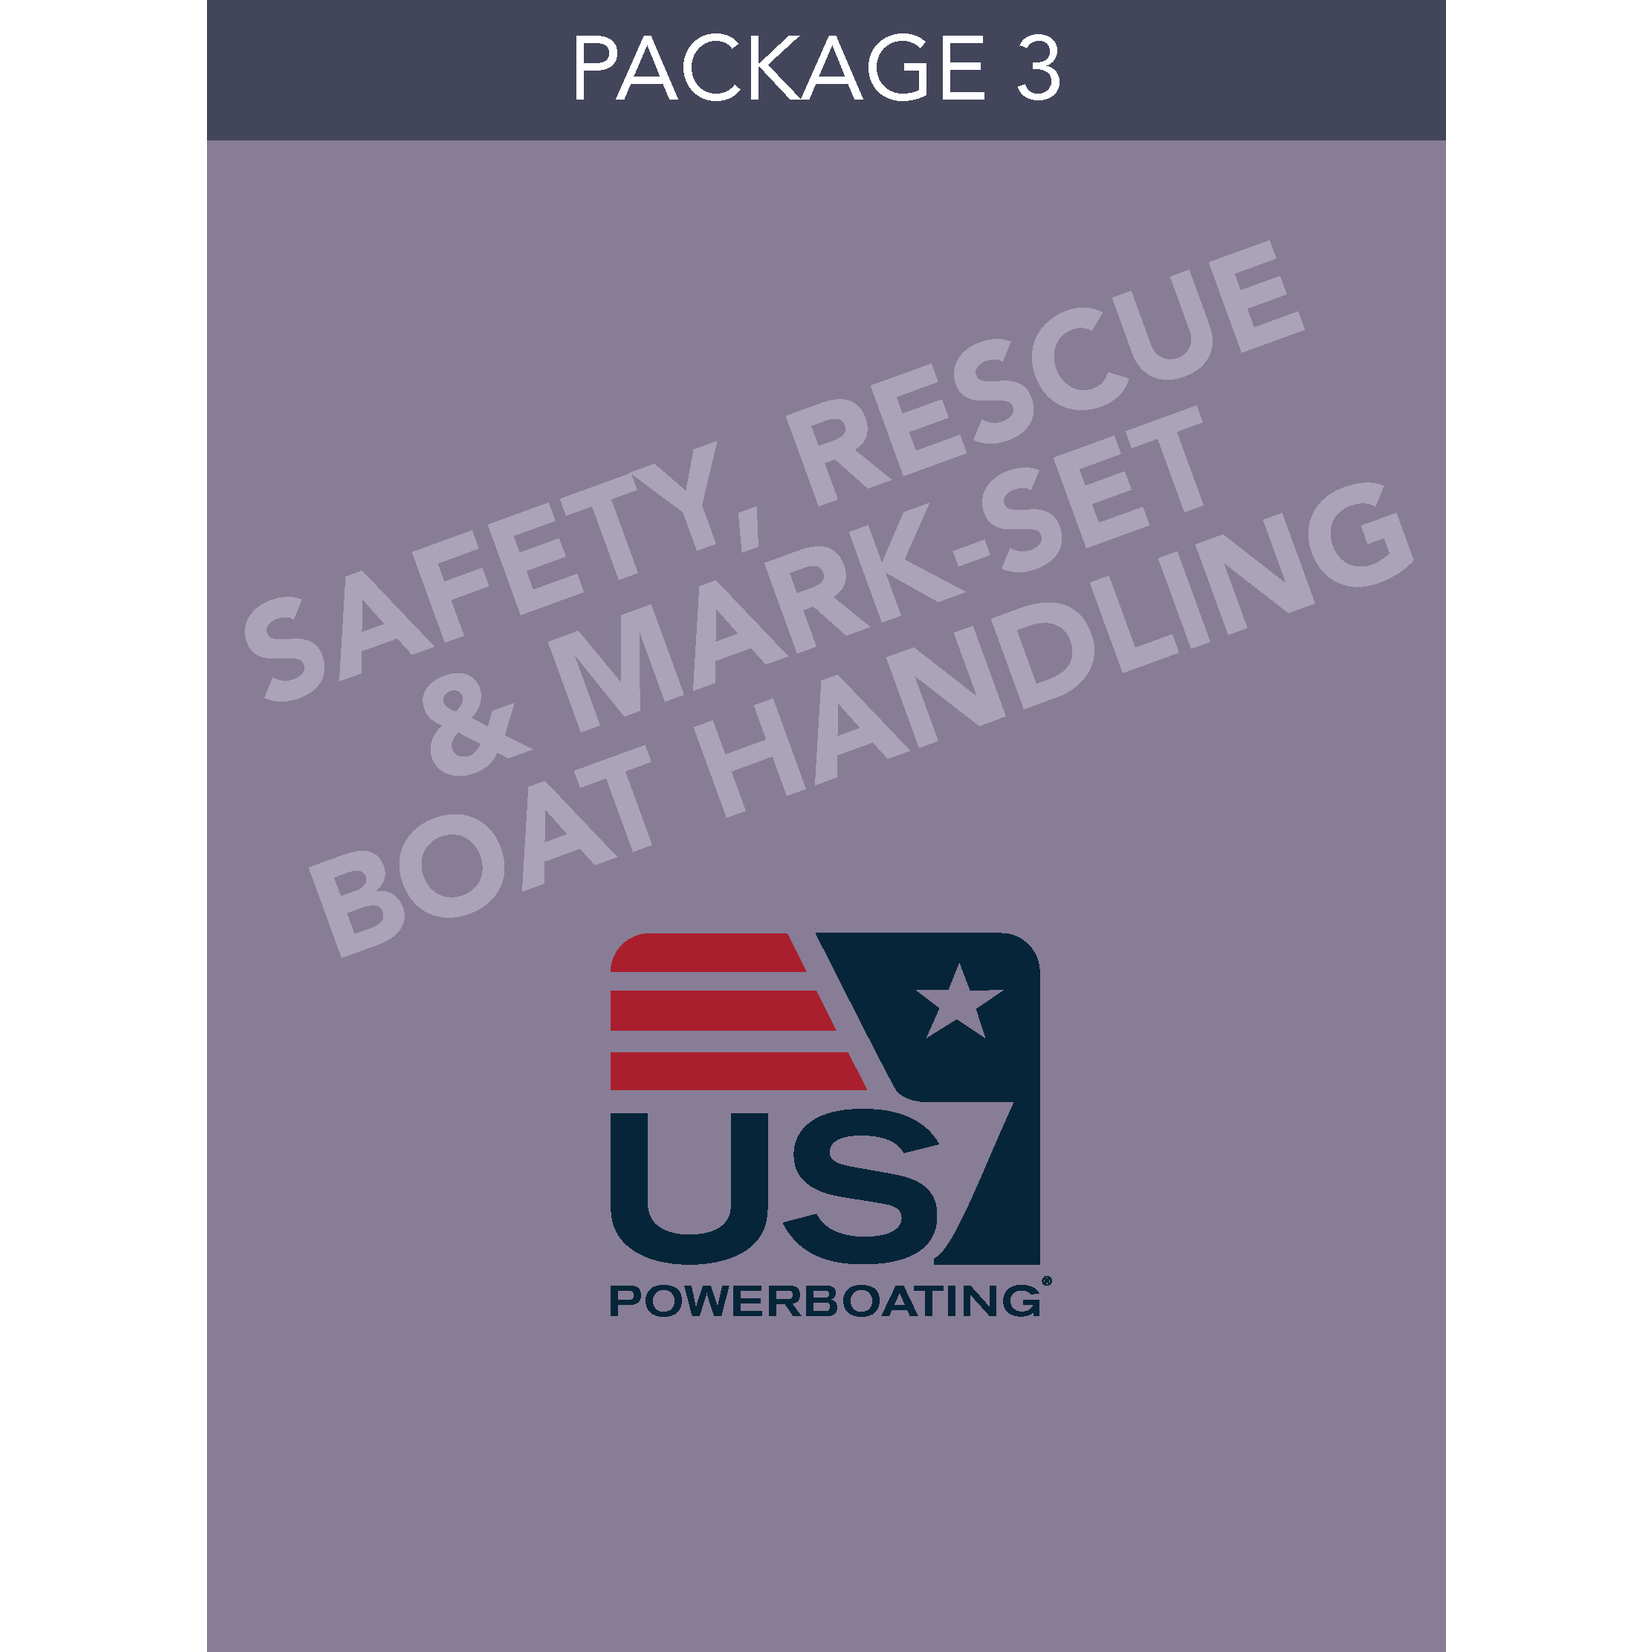 Safety, Rescue & Mark-Set Boat Handling- Package 3